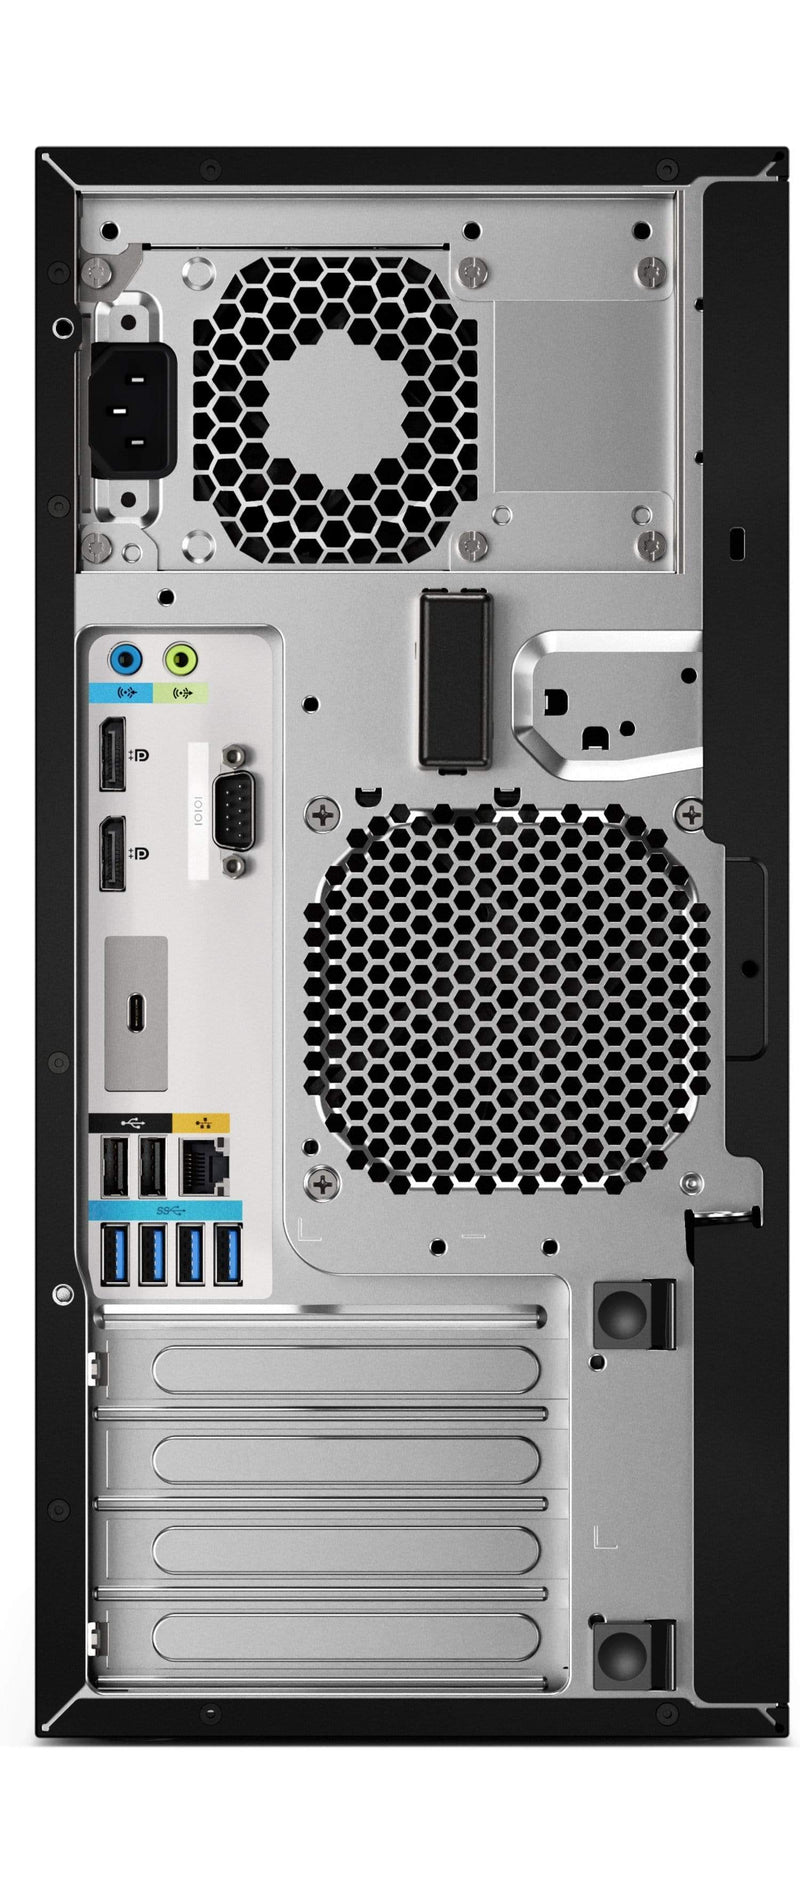 HP Z2 G4 Intel Core i7-9700 16GB RAM 512GB SSD Mini Workstation PC Black Windows 10 Pro 6TX05EA